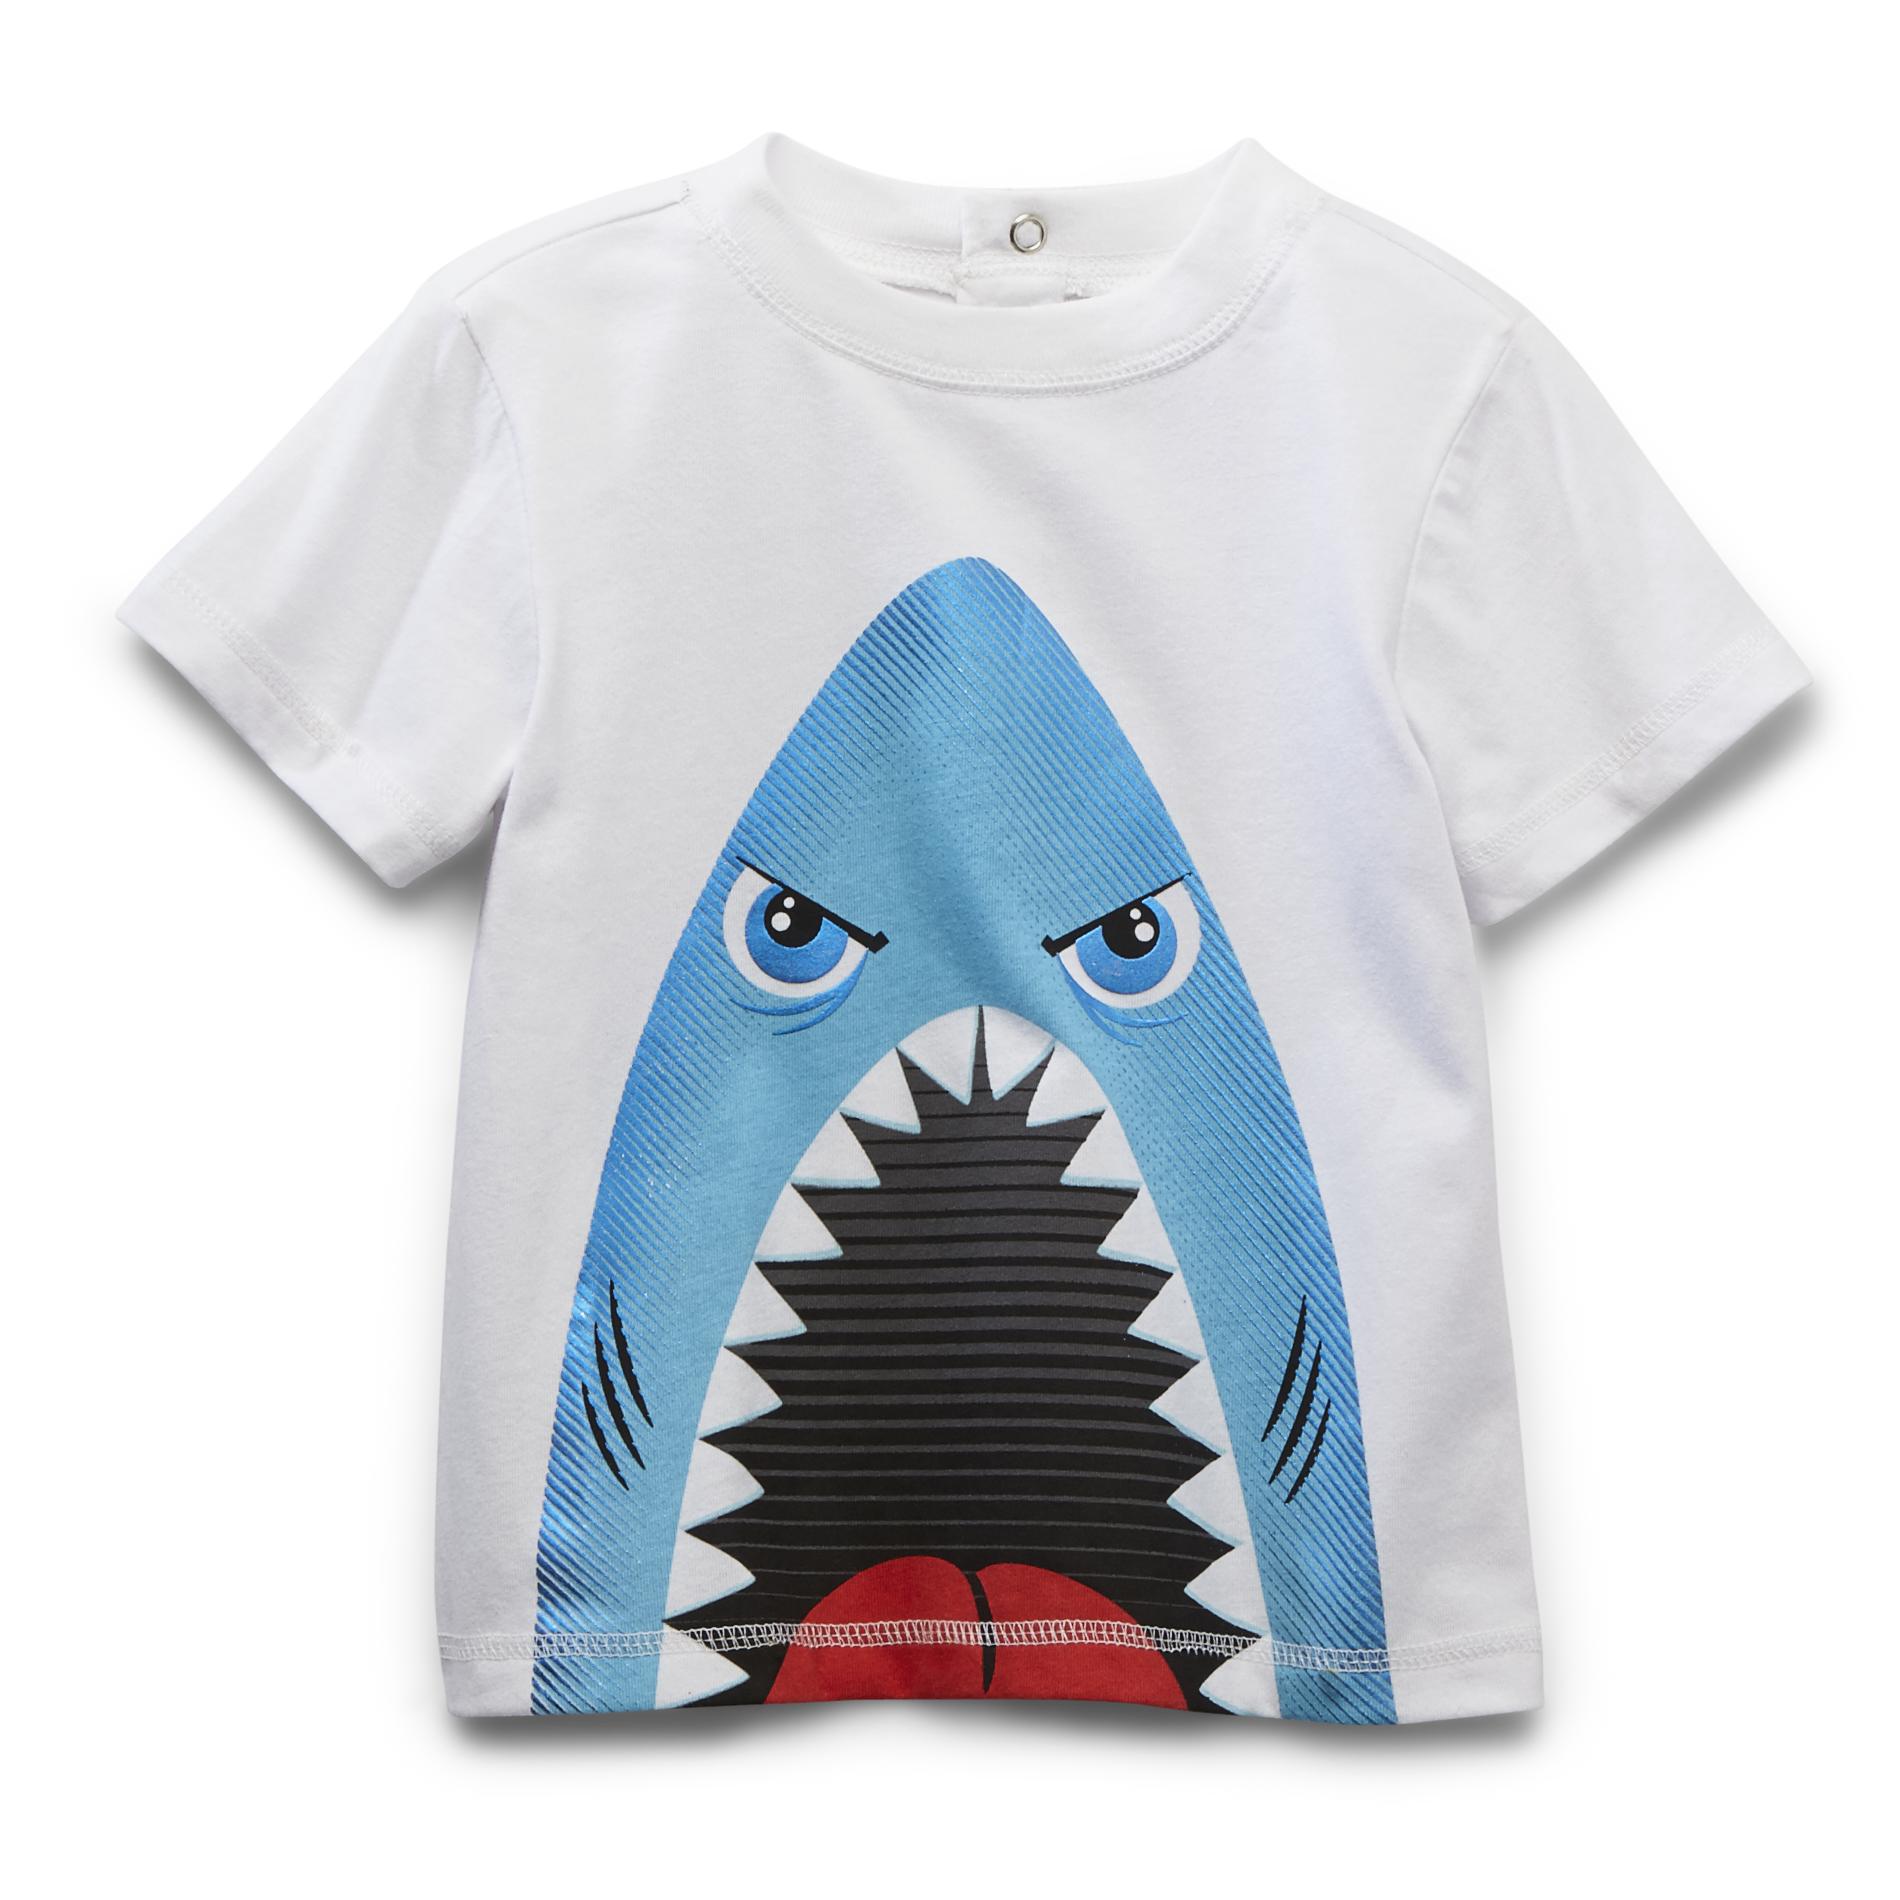 WonderKids Infant & Toddler Boy's Short-Sleeve Graphic T-Shirt - Shark